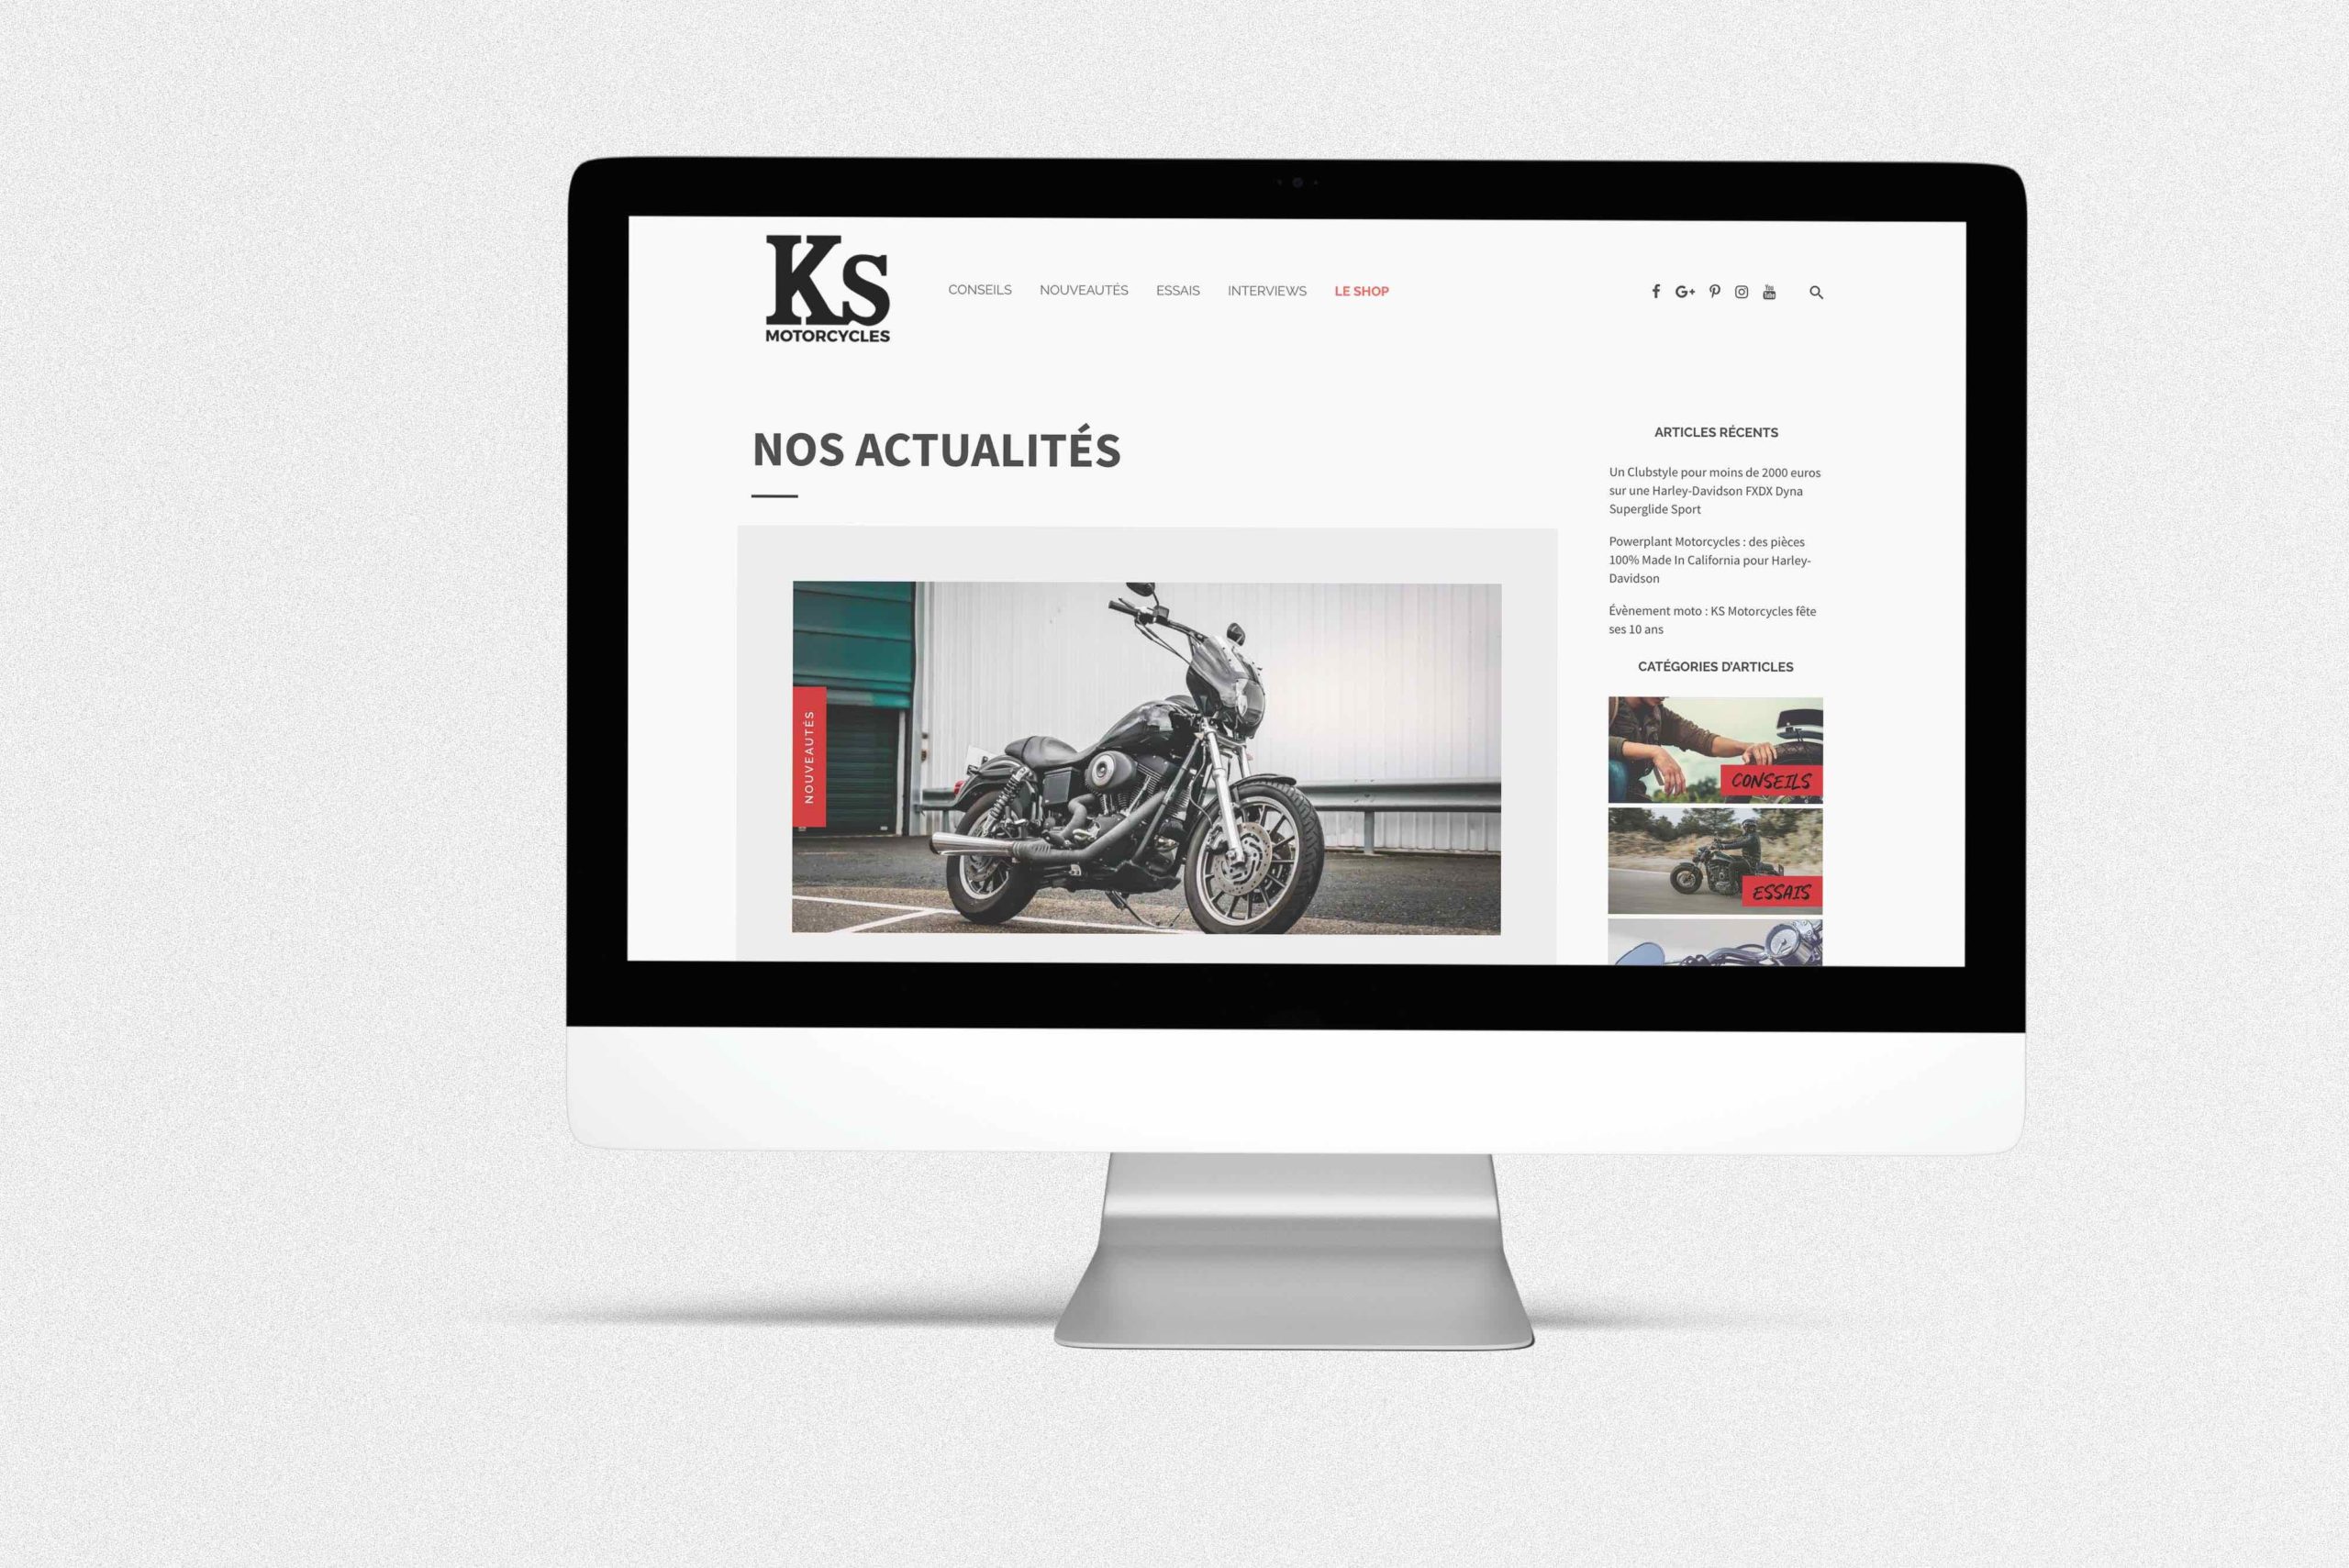 KS Motorcycles